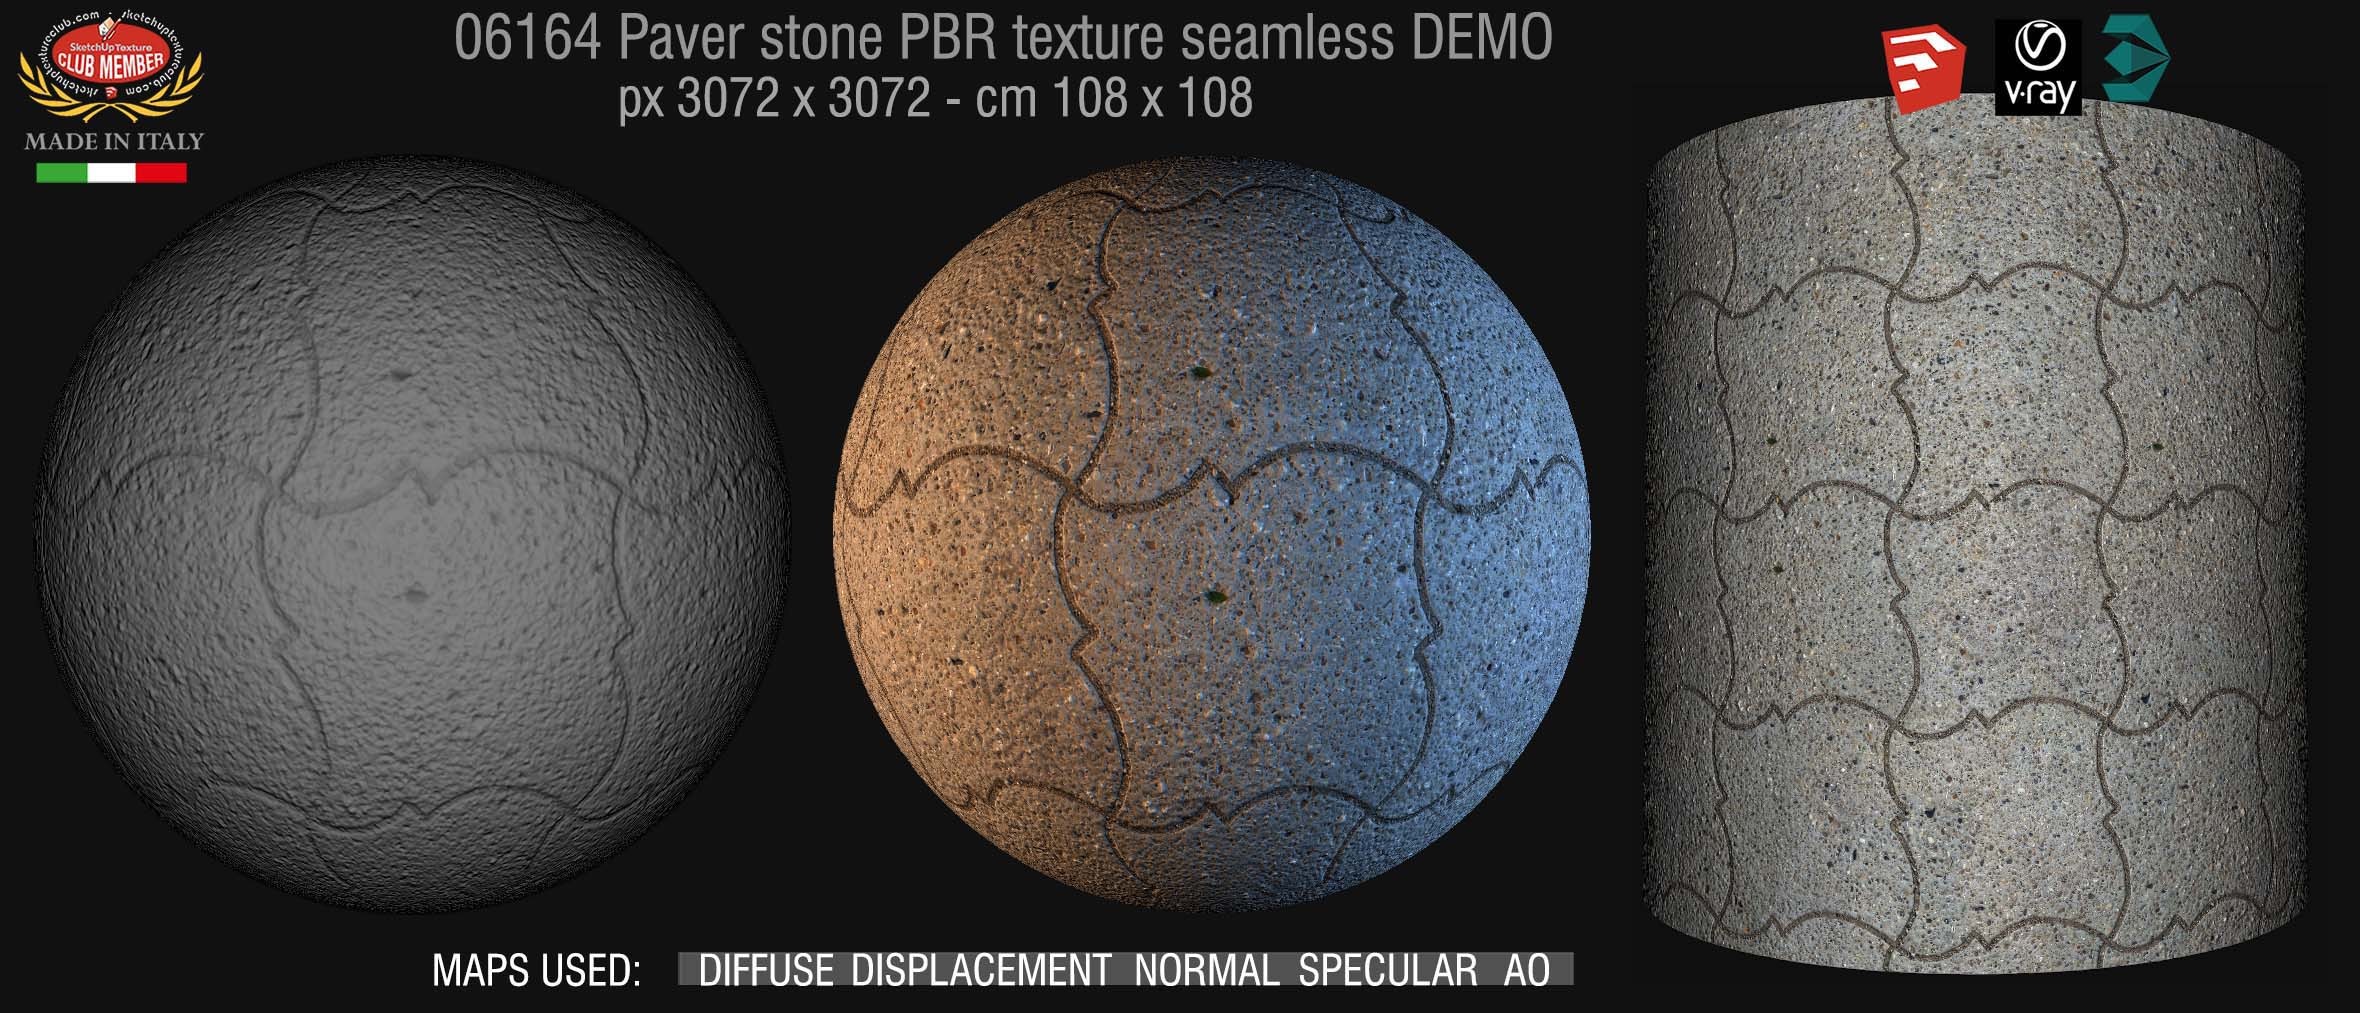 06164 paver stone PBR texture seamless DEMO